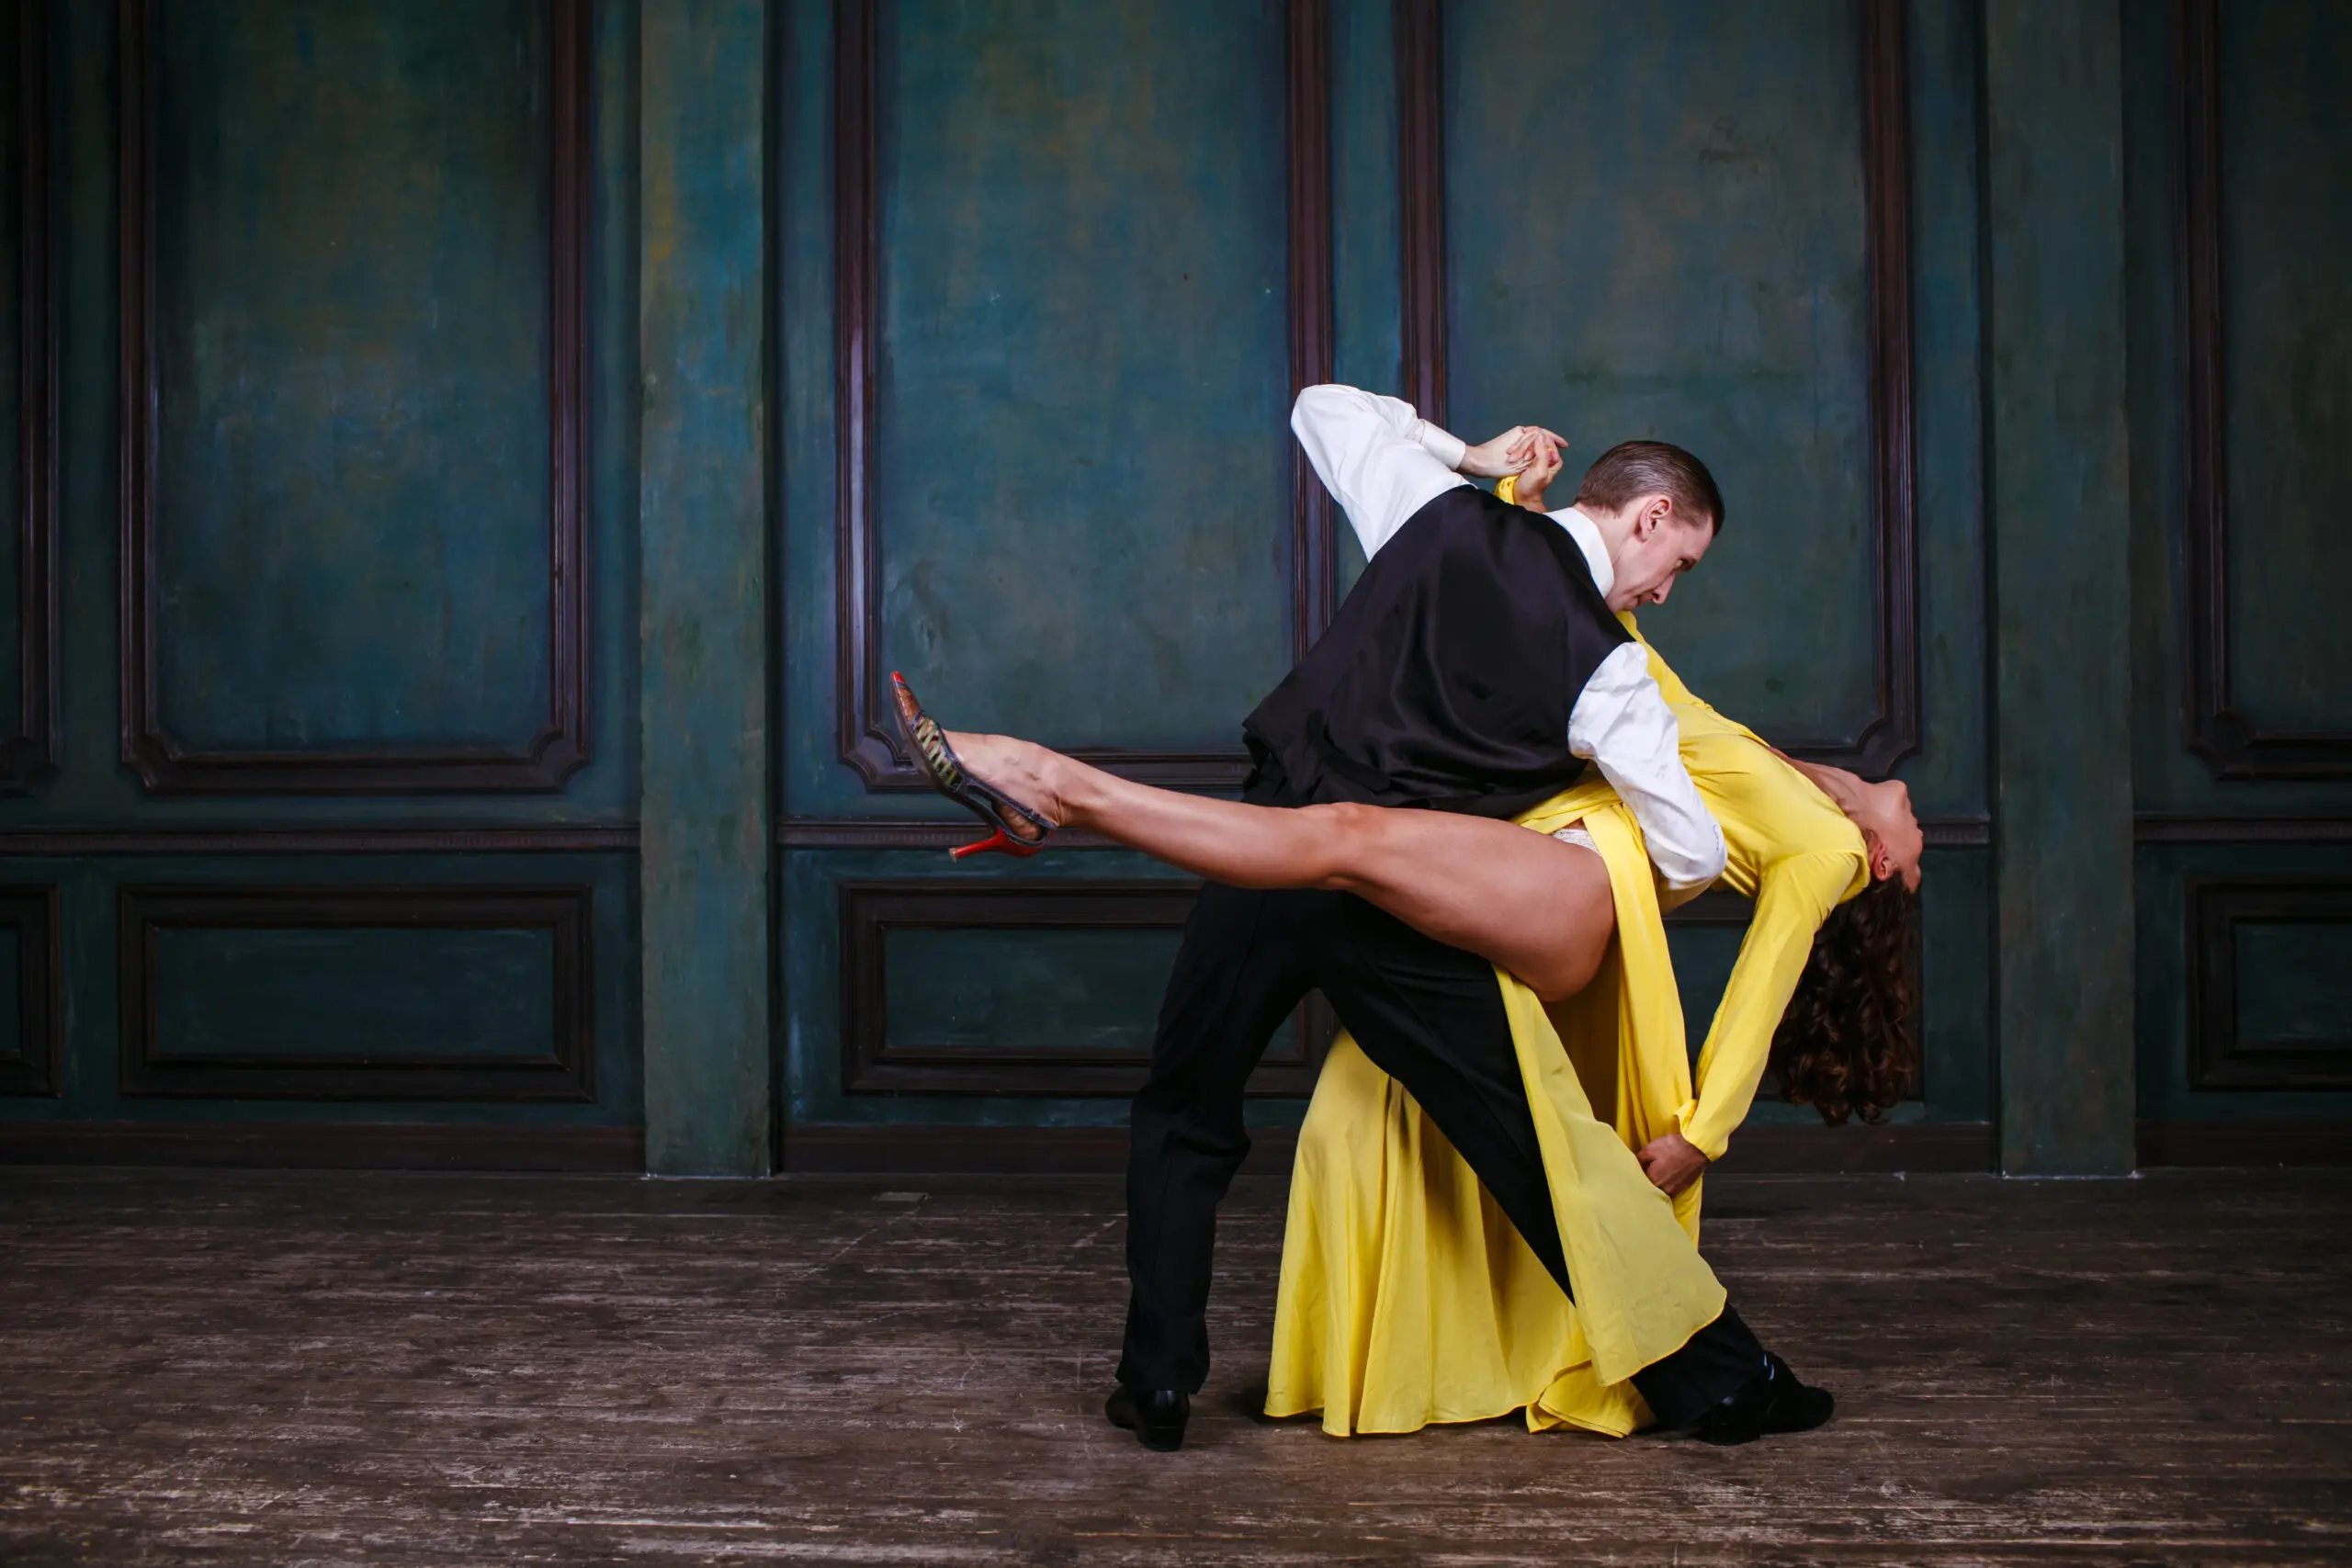 Silhouettes Pairs Dancing Ballroom Dances Waltz Stock Vector (Royalty Free)  15600739 | Shutterstock